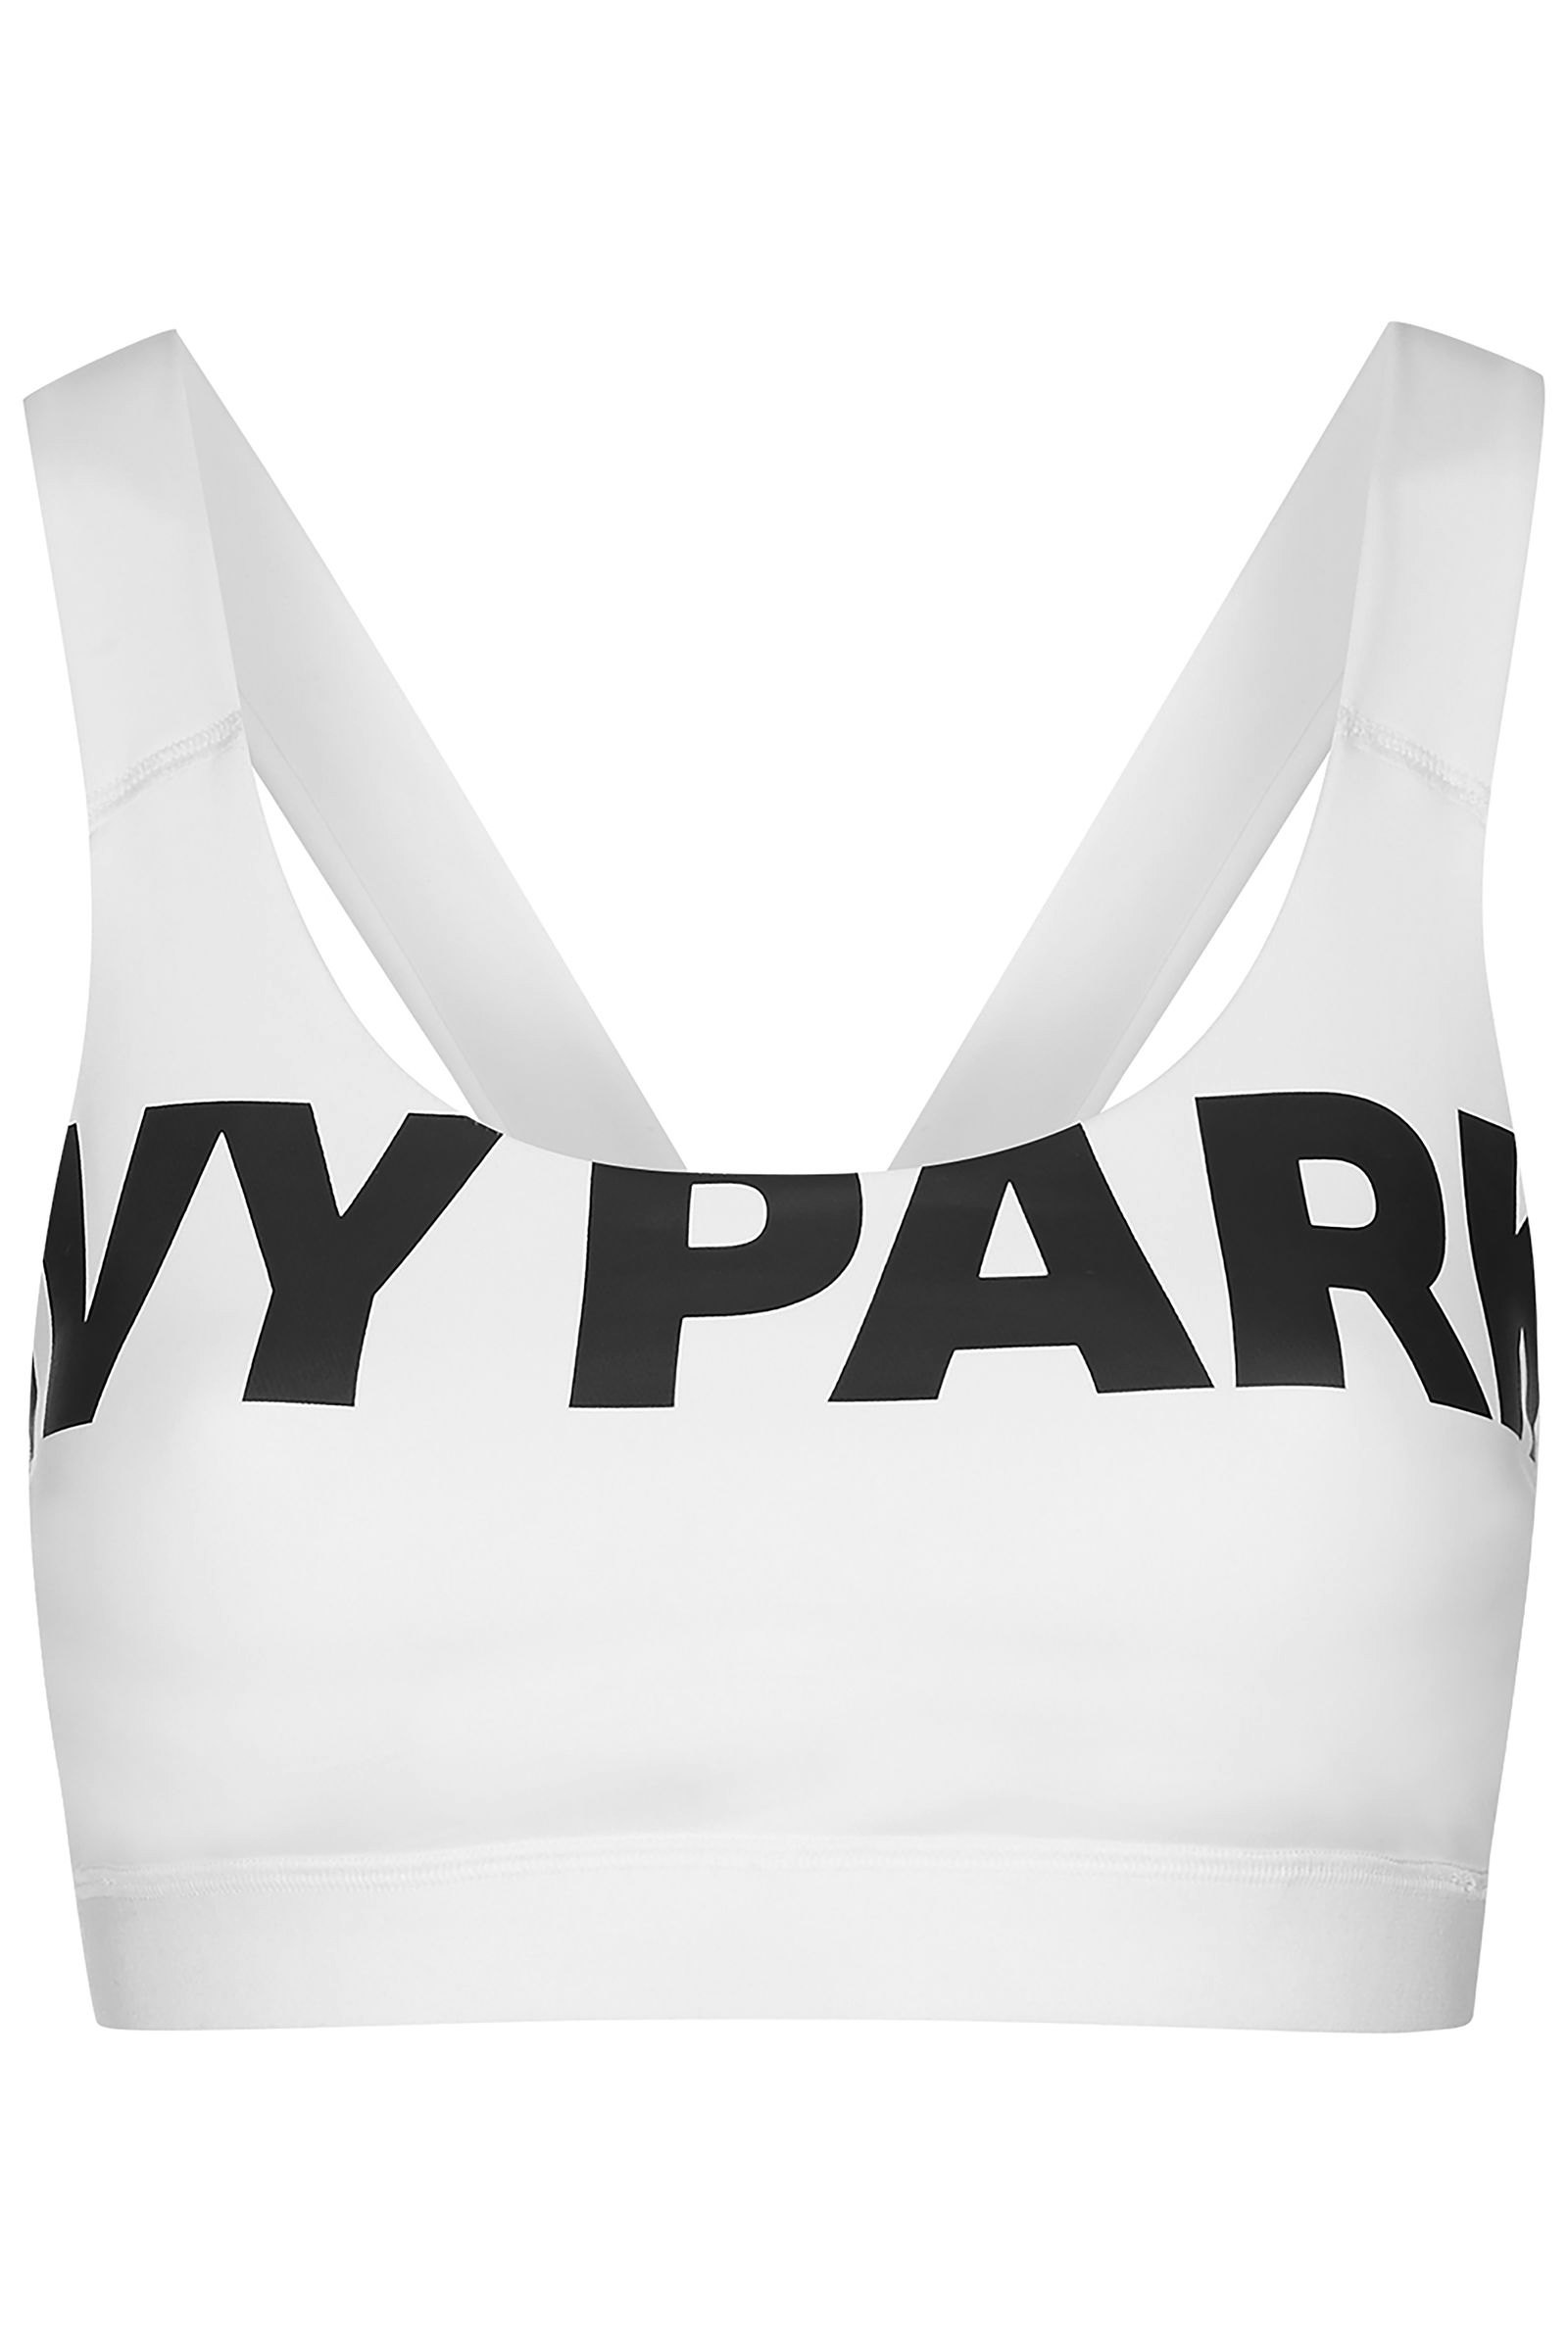 IVY PARK Logo Sports Bra in Ink